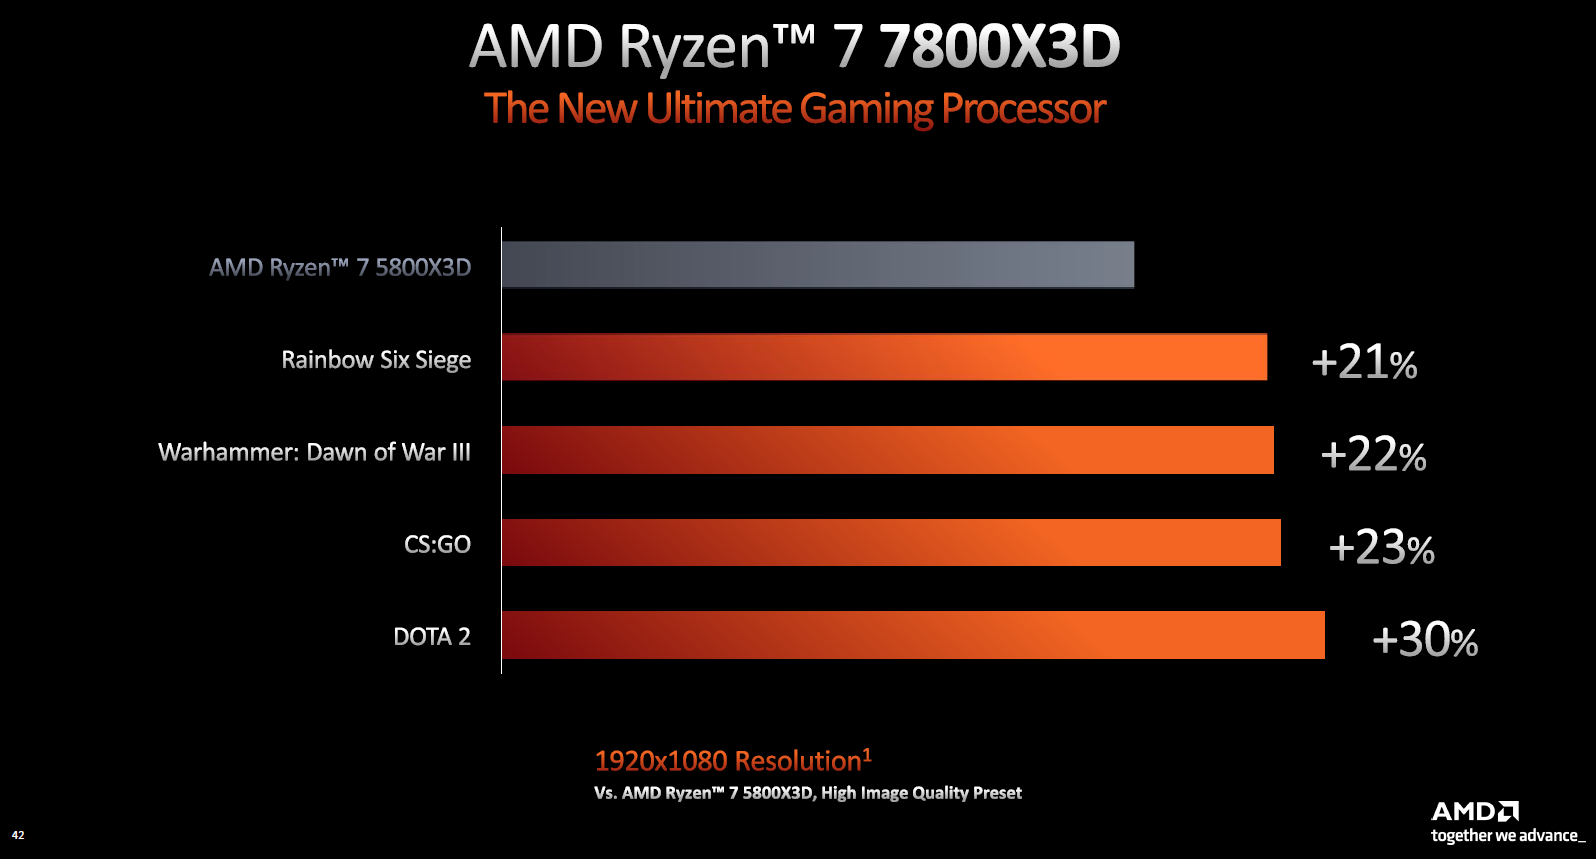 AMD Ryzen 9 7950X3D vs AMD Ryzen 9 7950X CPU Performance - Page 3 of 4